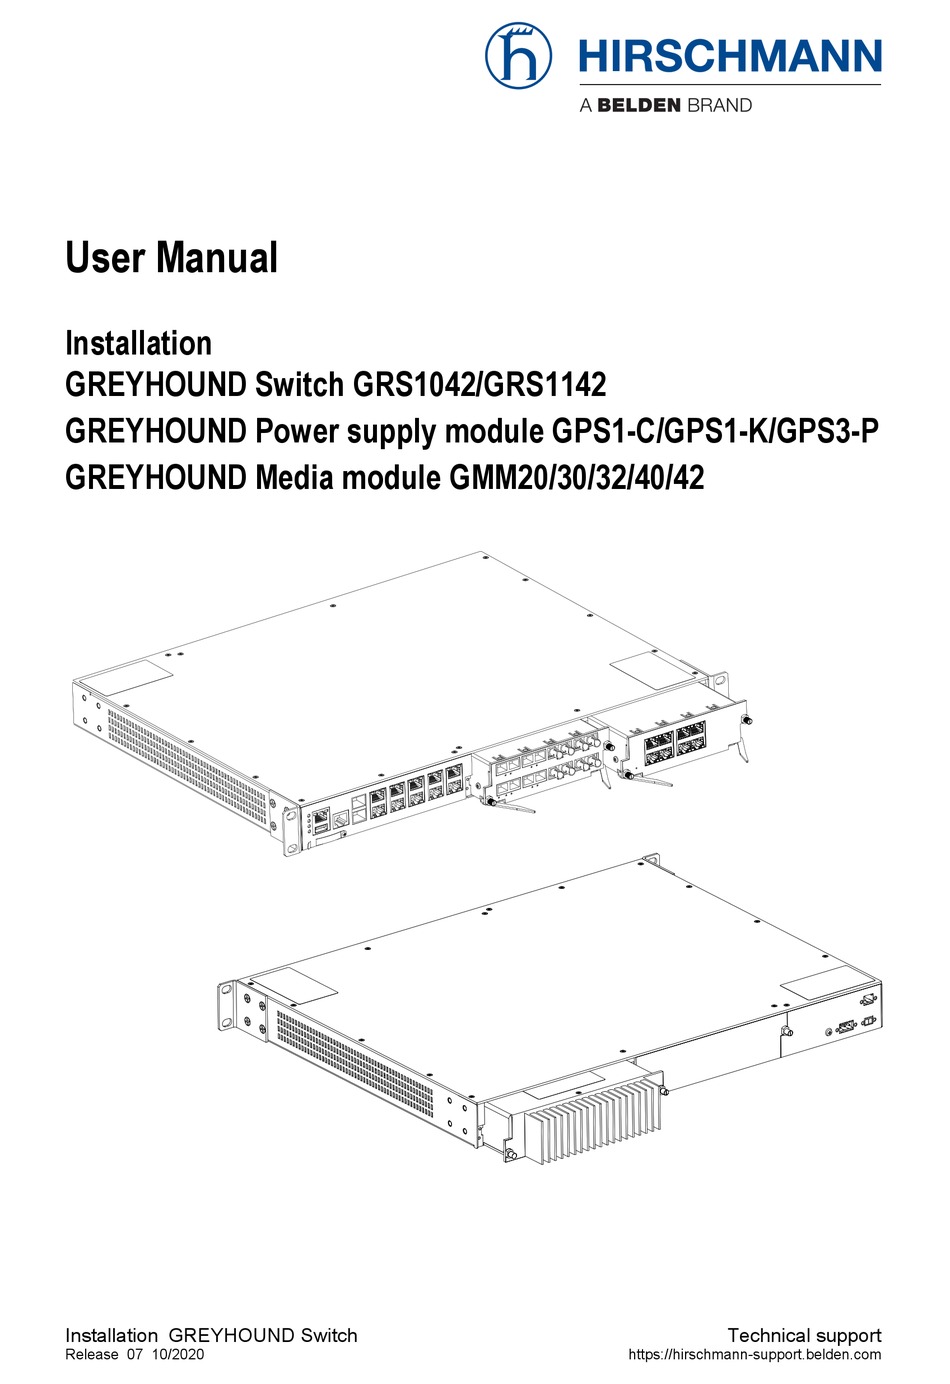 hirschmann switch manual